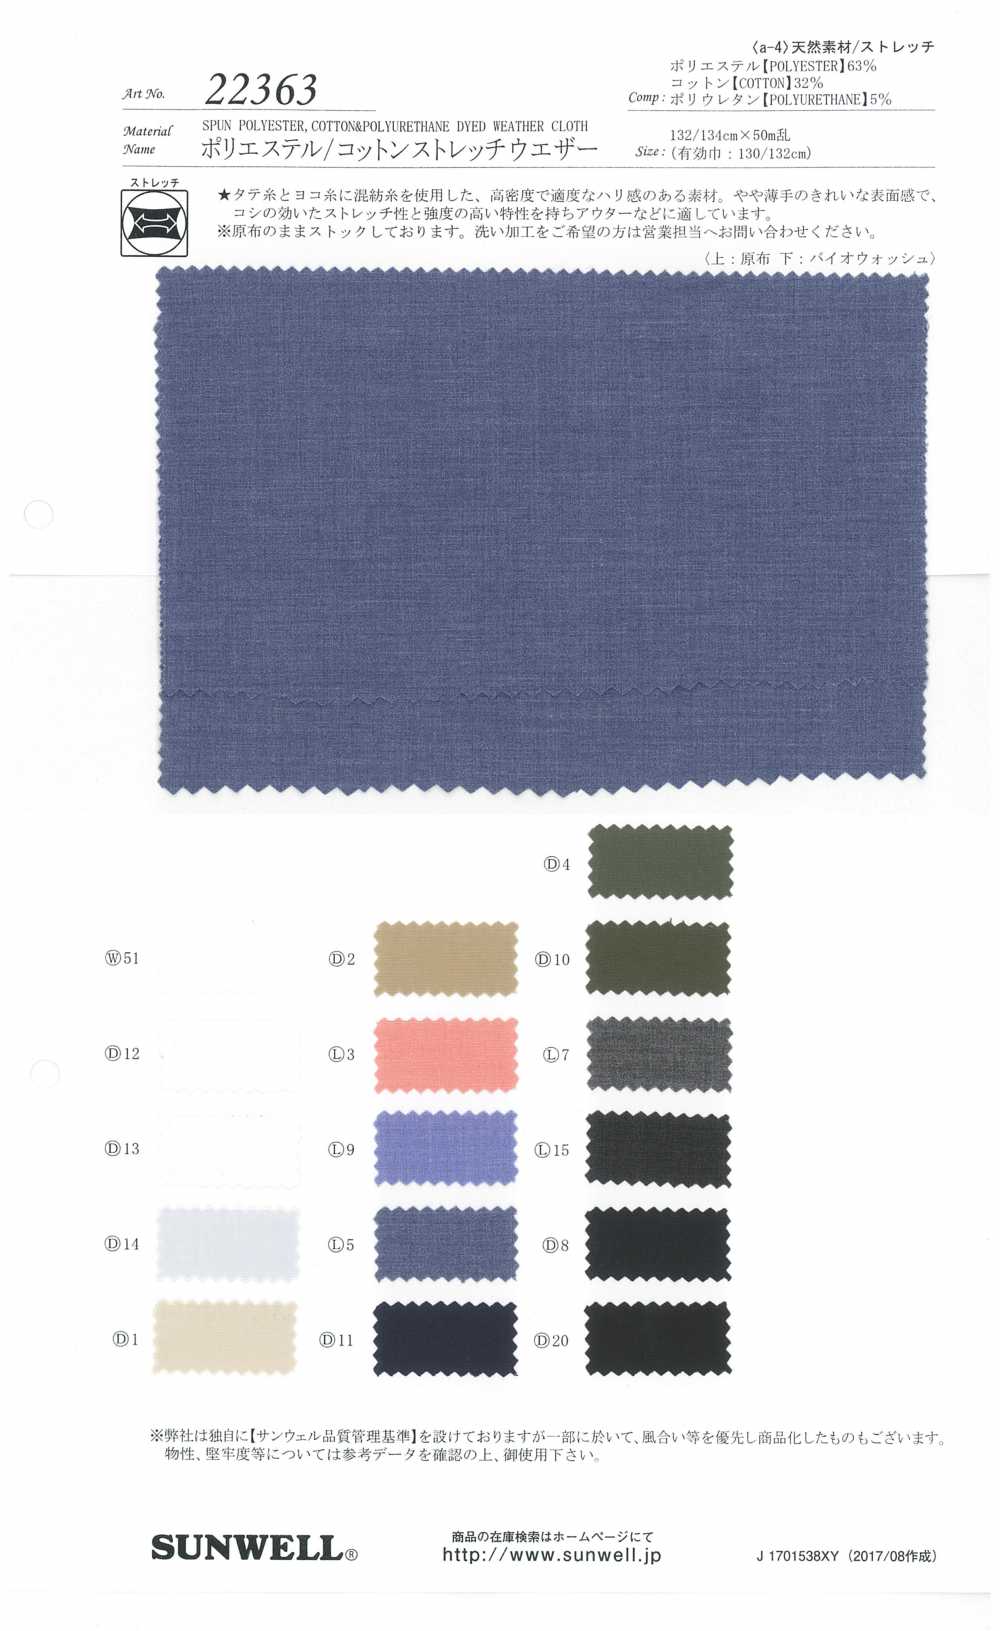 22363 Polyester / Baumwollstretch Wetter Stretch[Textilgewebe] SUNWELL